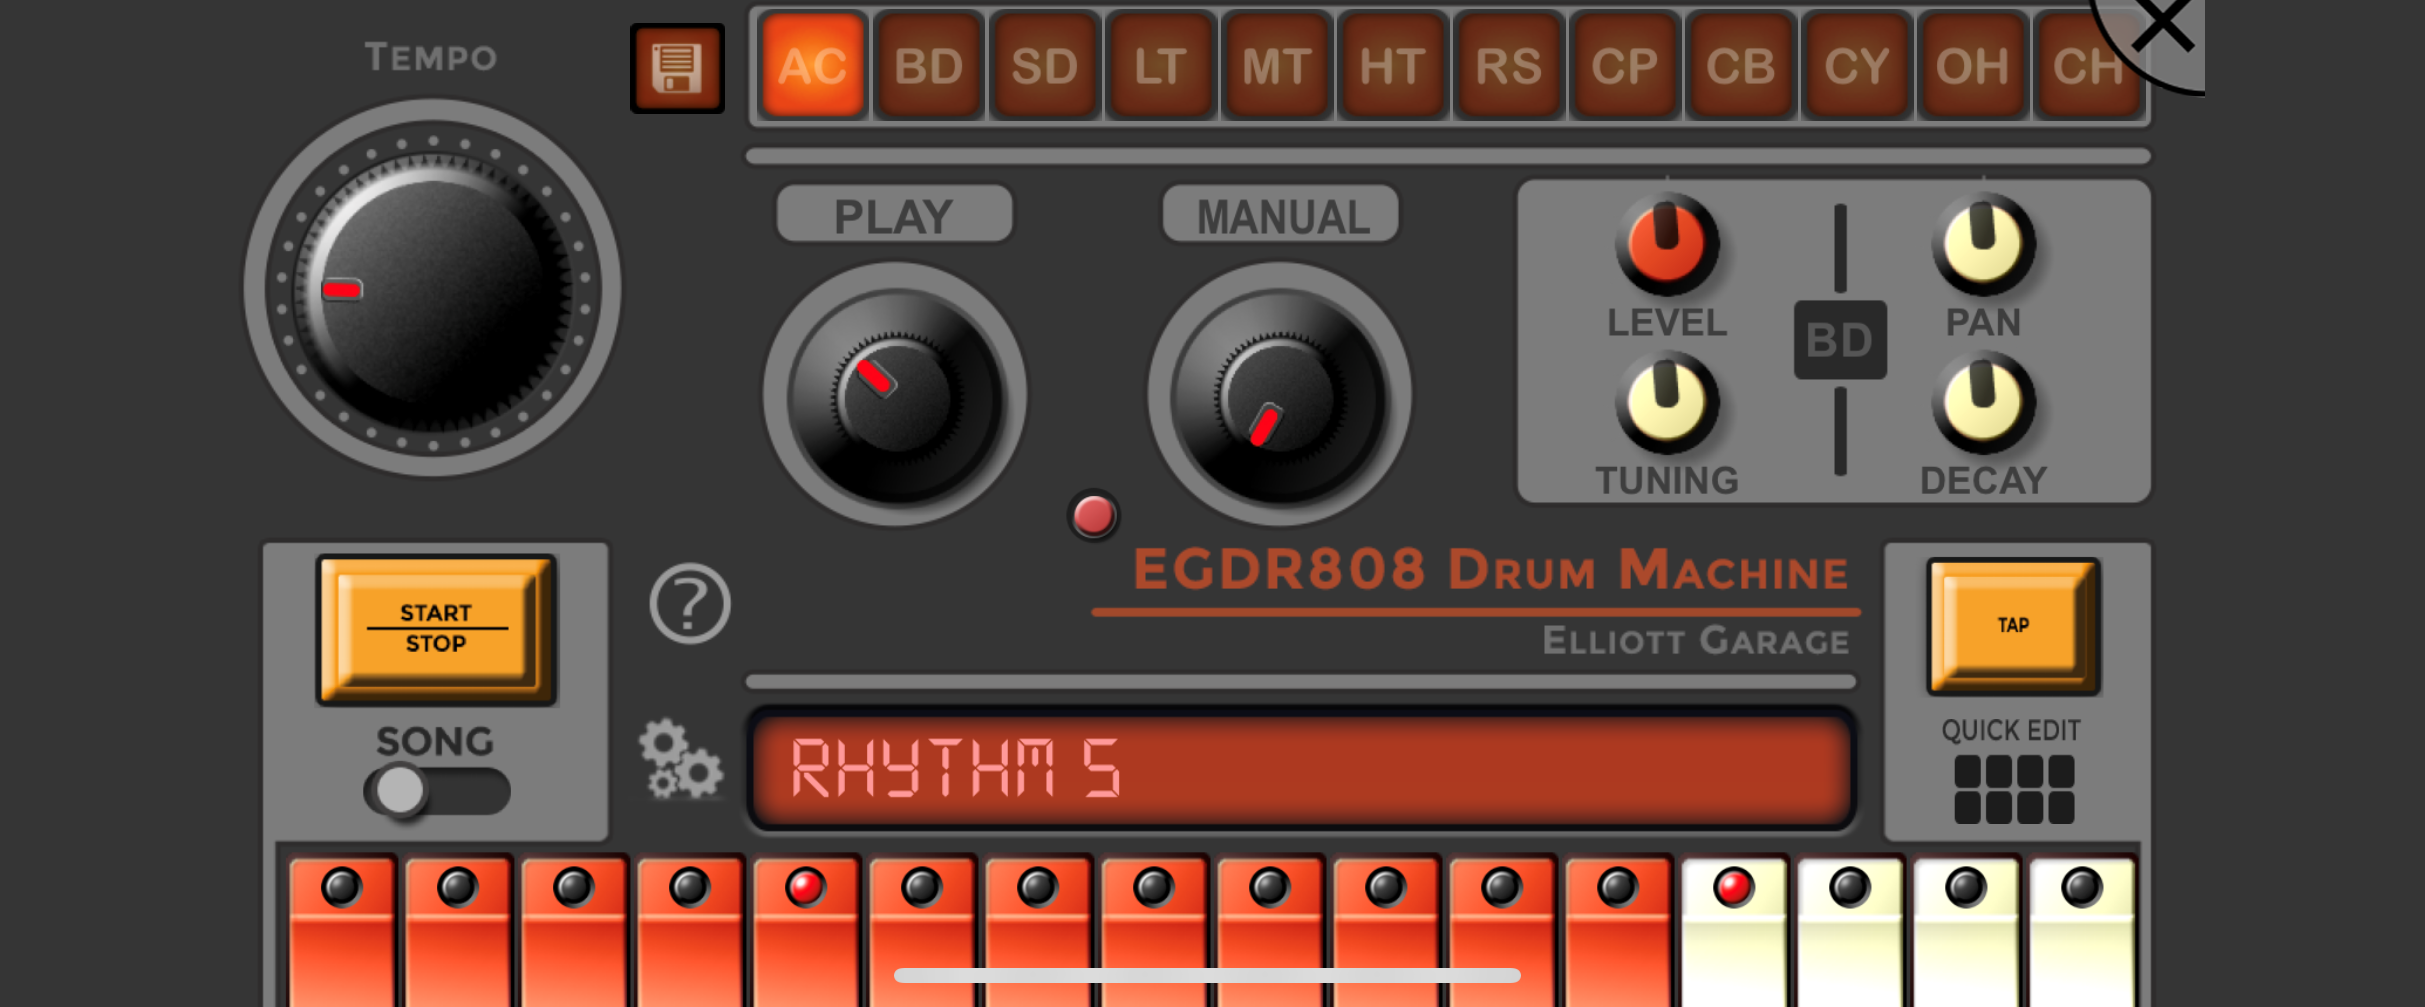 EGDR808 drum app